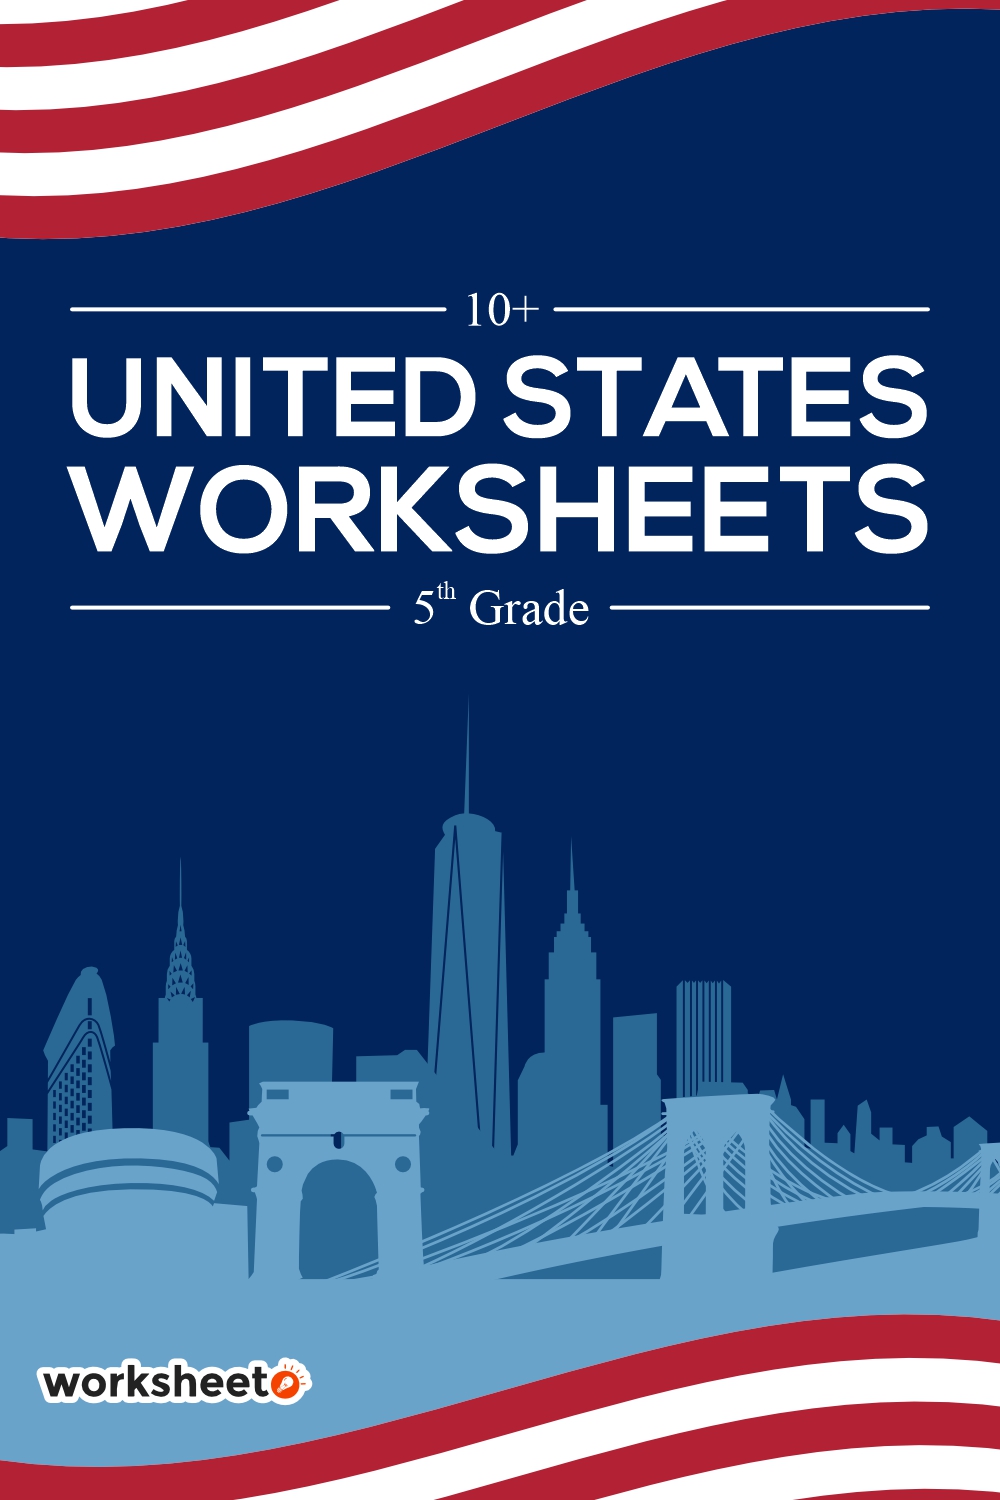 13-united-states-worksheets-5th-grade-free-pdf-at-worksheeto